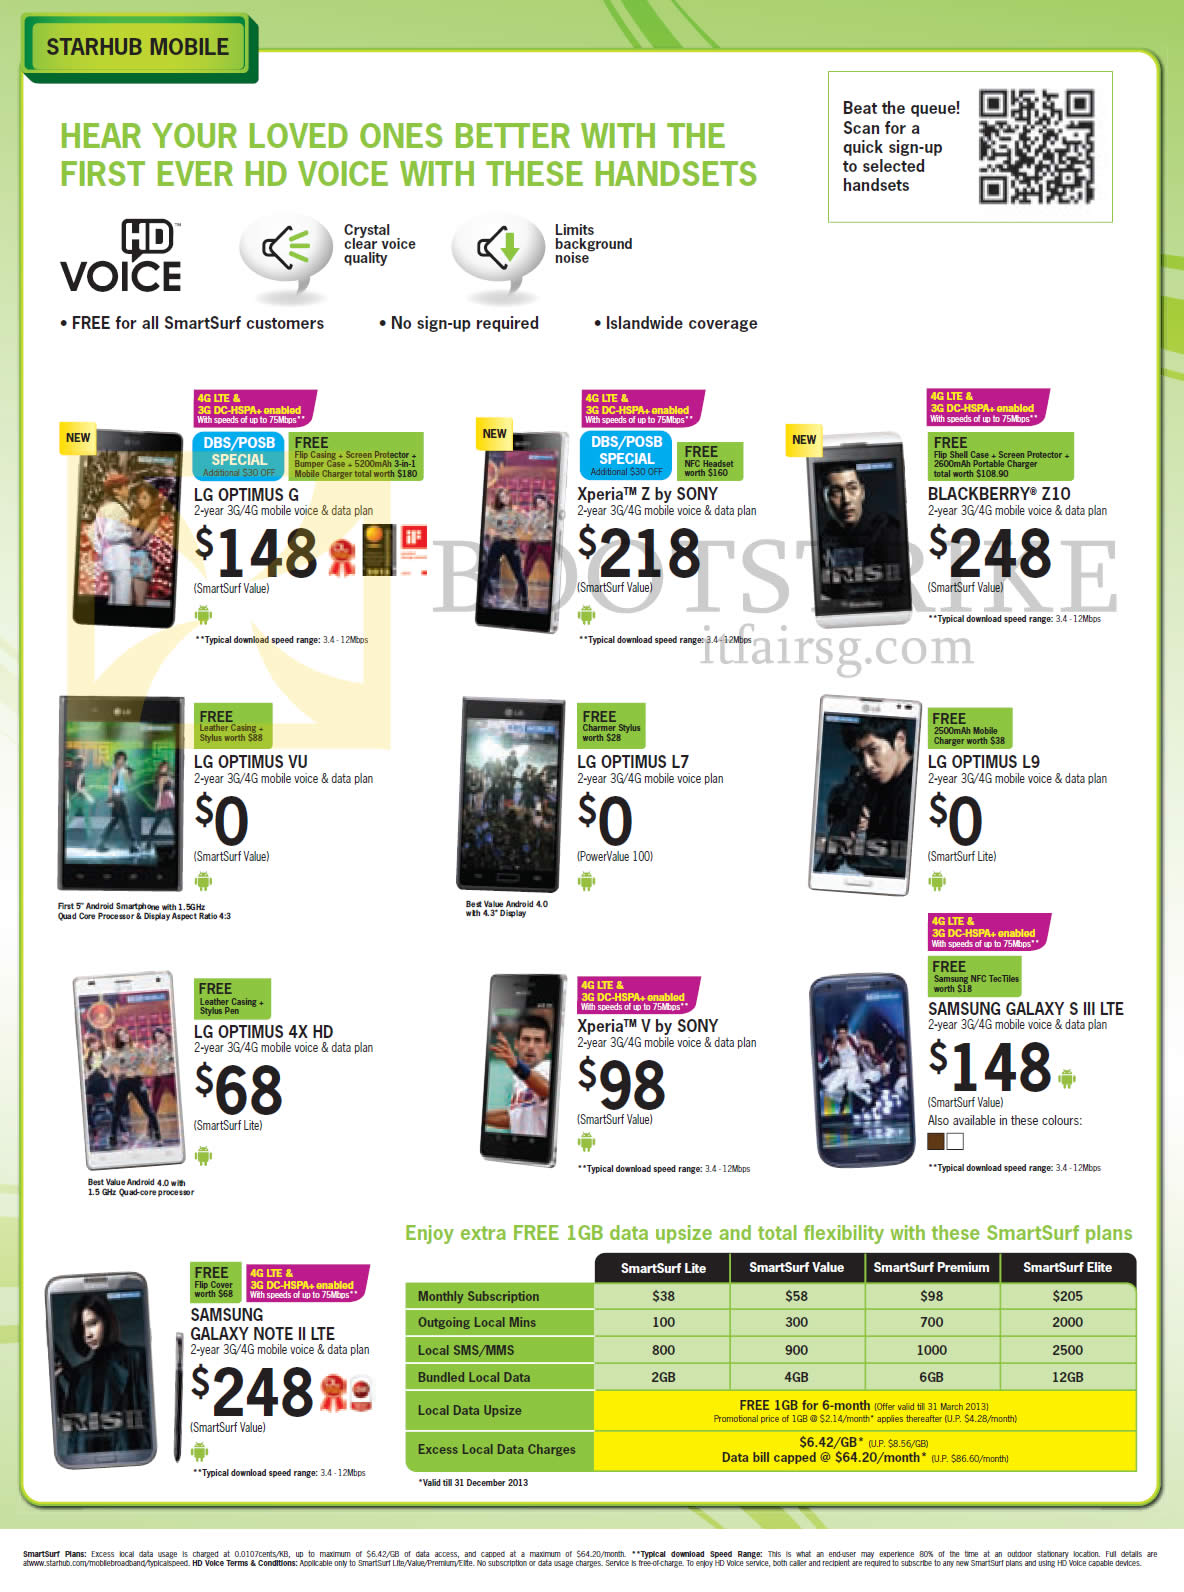 IT SHOW 2013 price list image brochure of Starhub Mobile Phones LG Optimus G, Vu, L7, L9, 4X HD, Sony Xperia Z, Xperia V, Blackberry Z10, Samsung Galaxy S III LTE